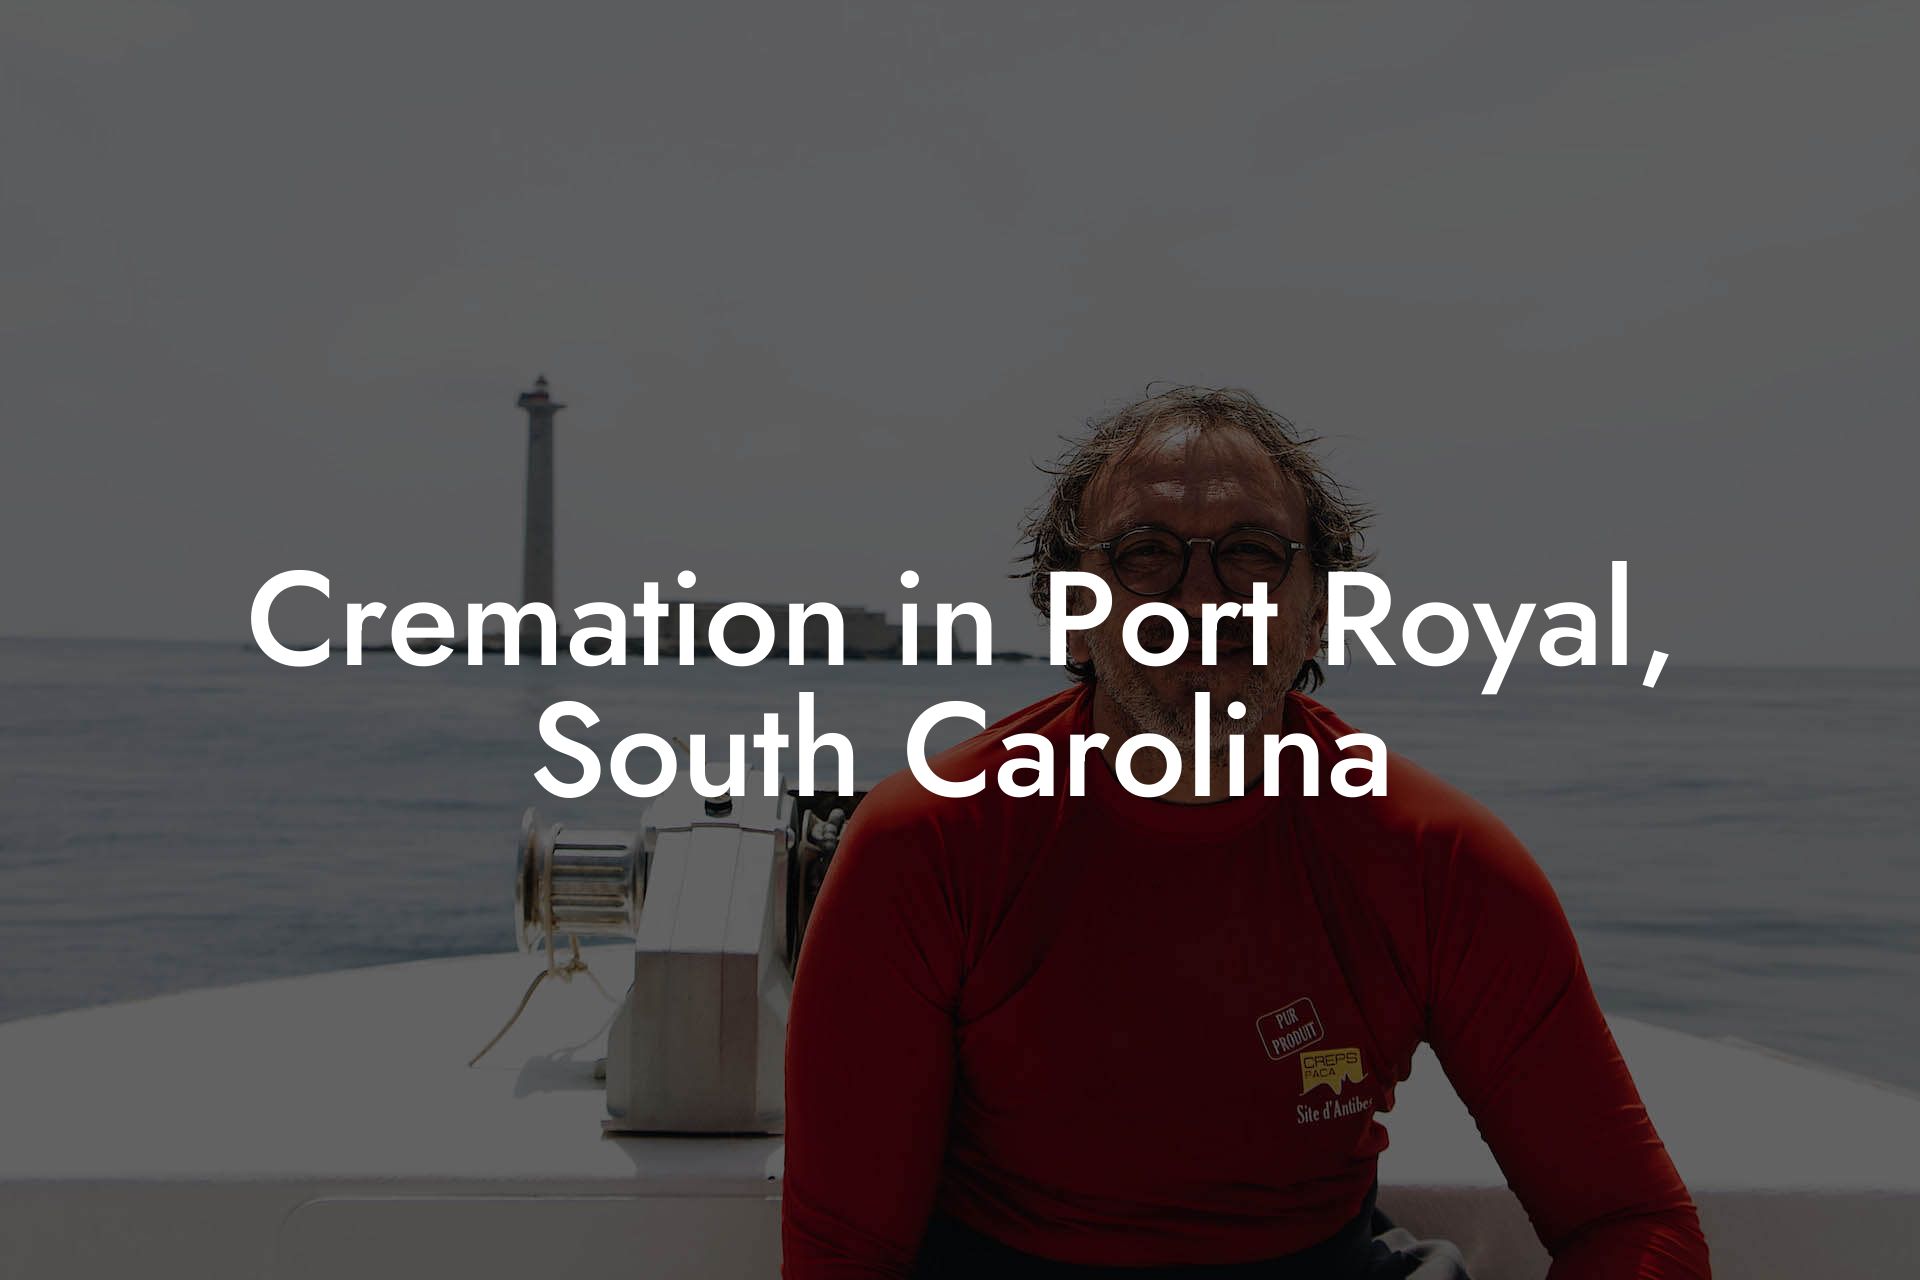 Cremation in Port Royal, South Carolina